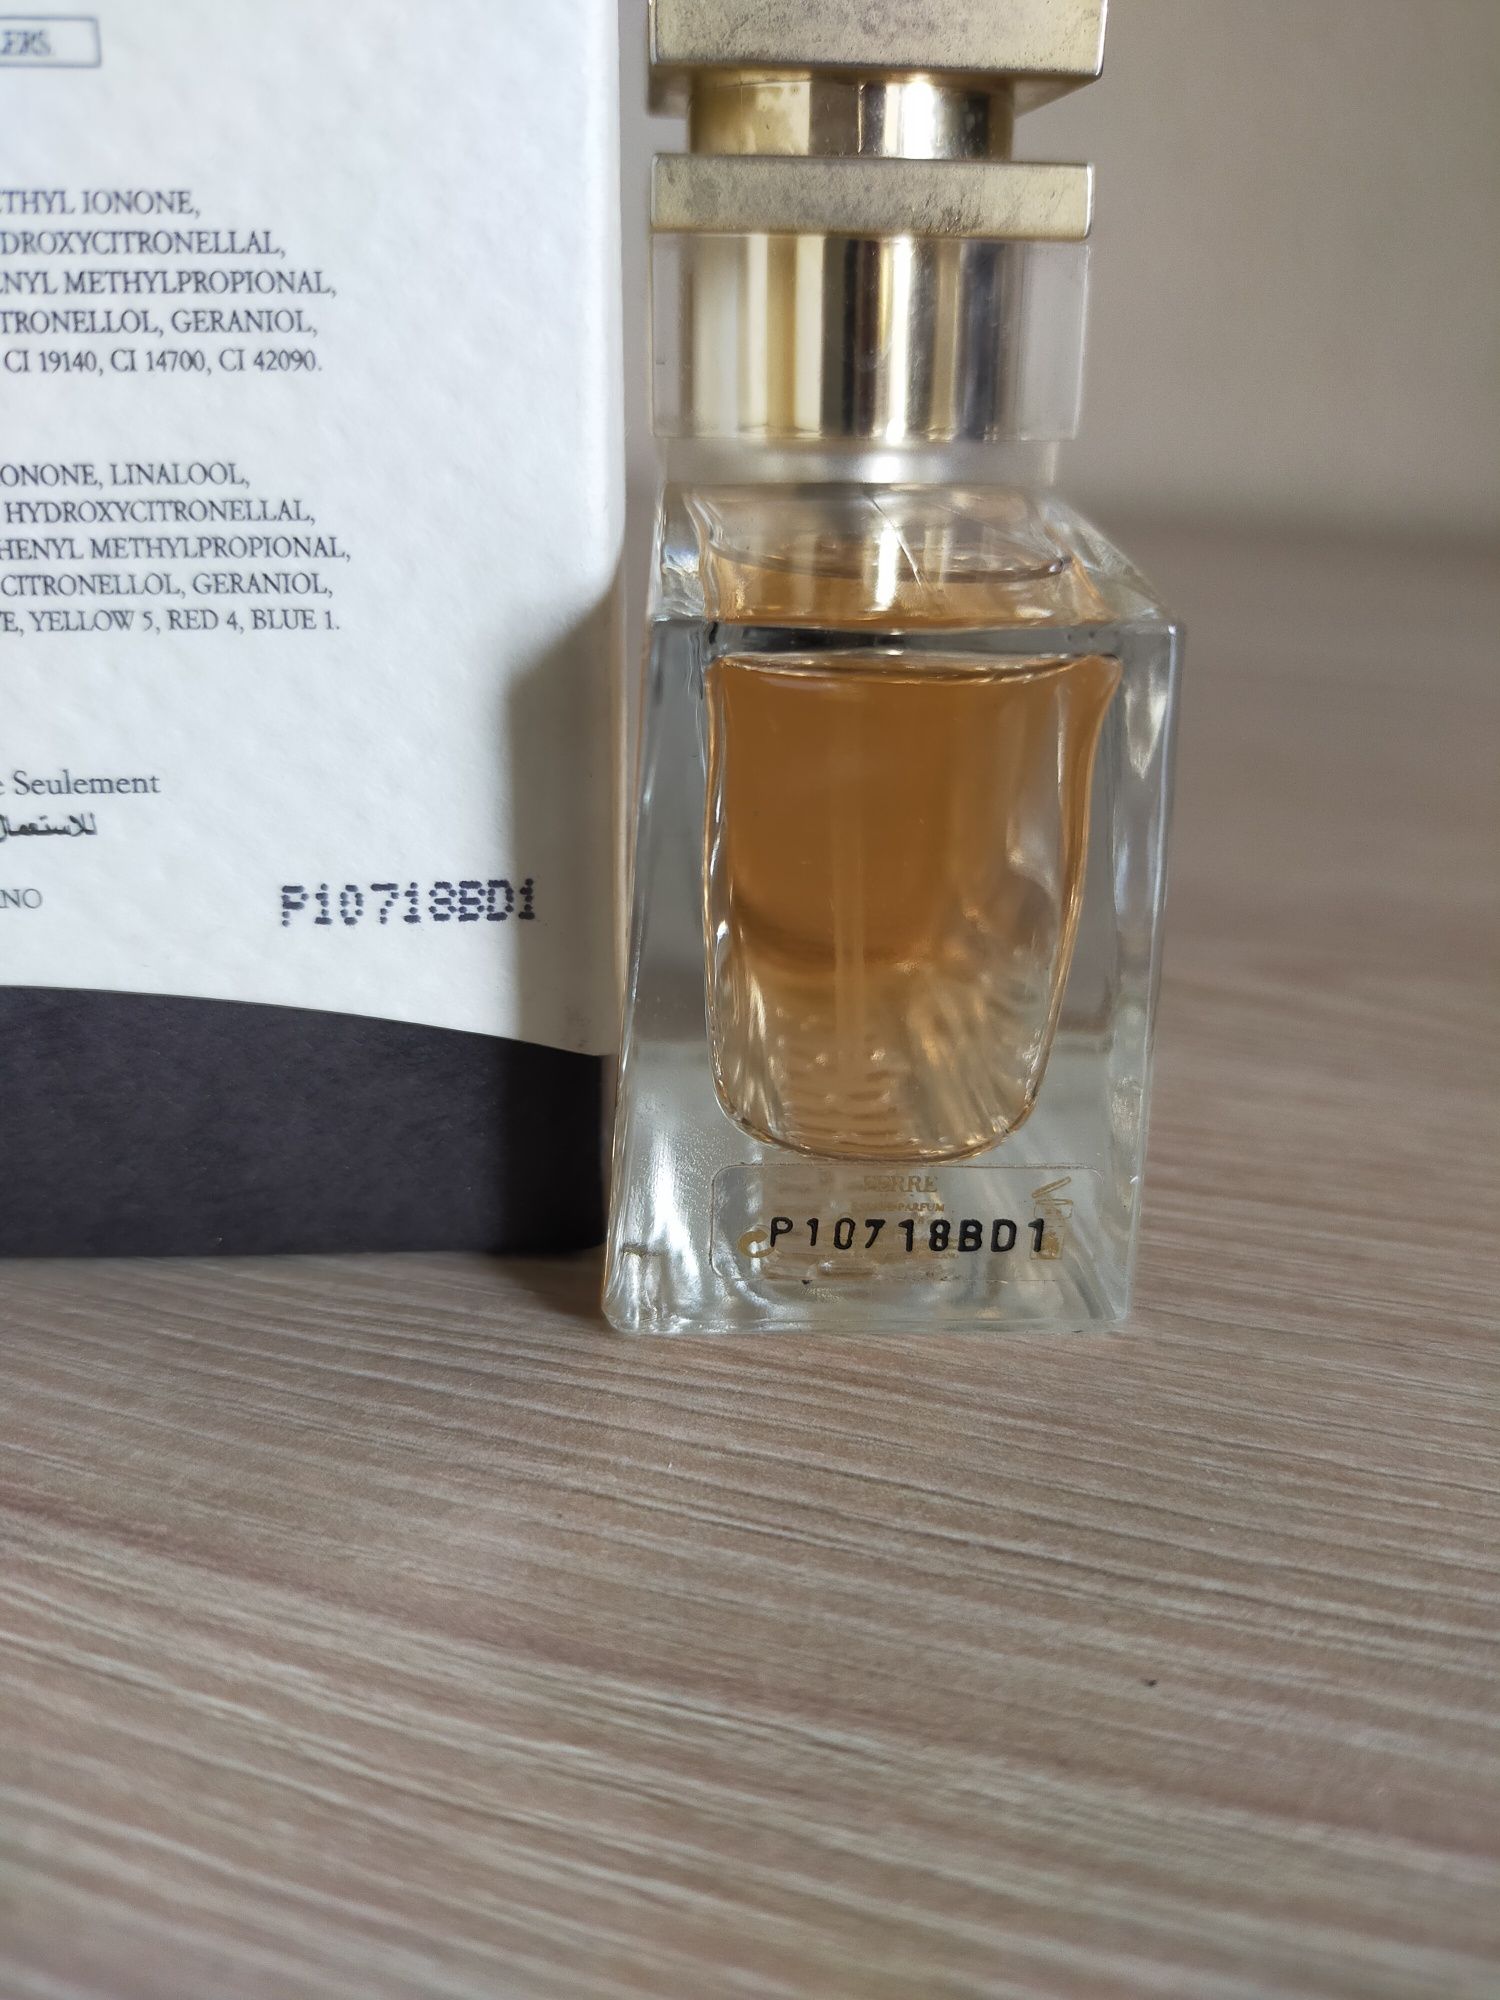 Givenchy Eau Torride
Gianfranco Ferre Ferre parfum Lancome Cyclades